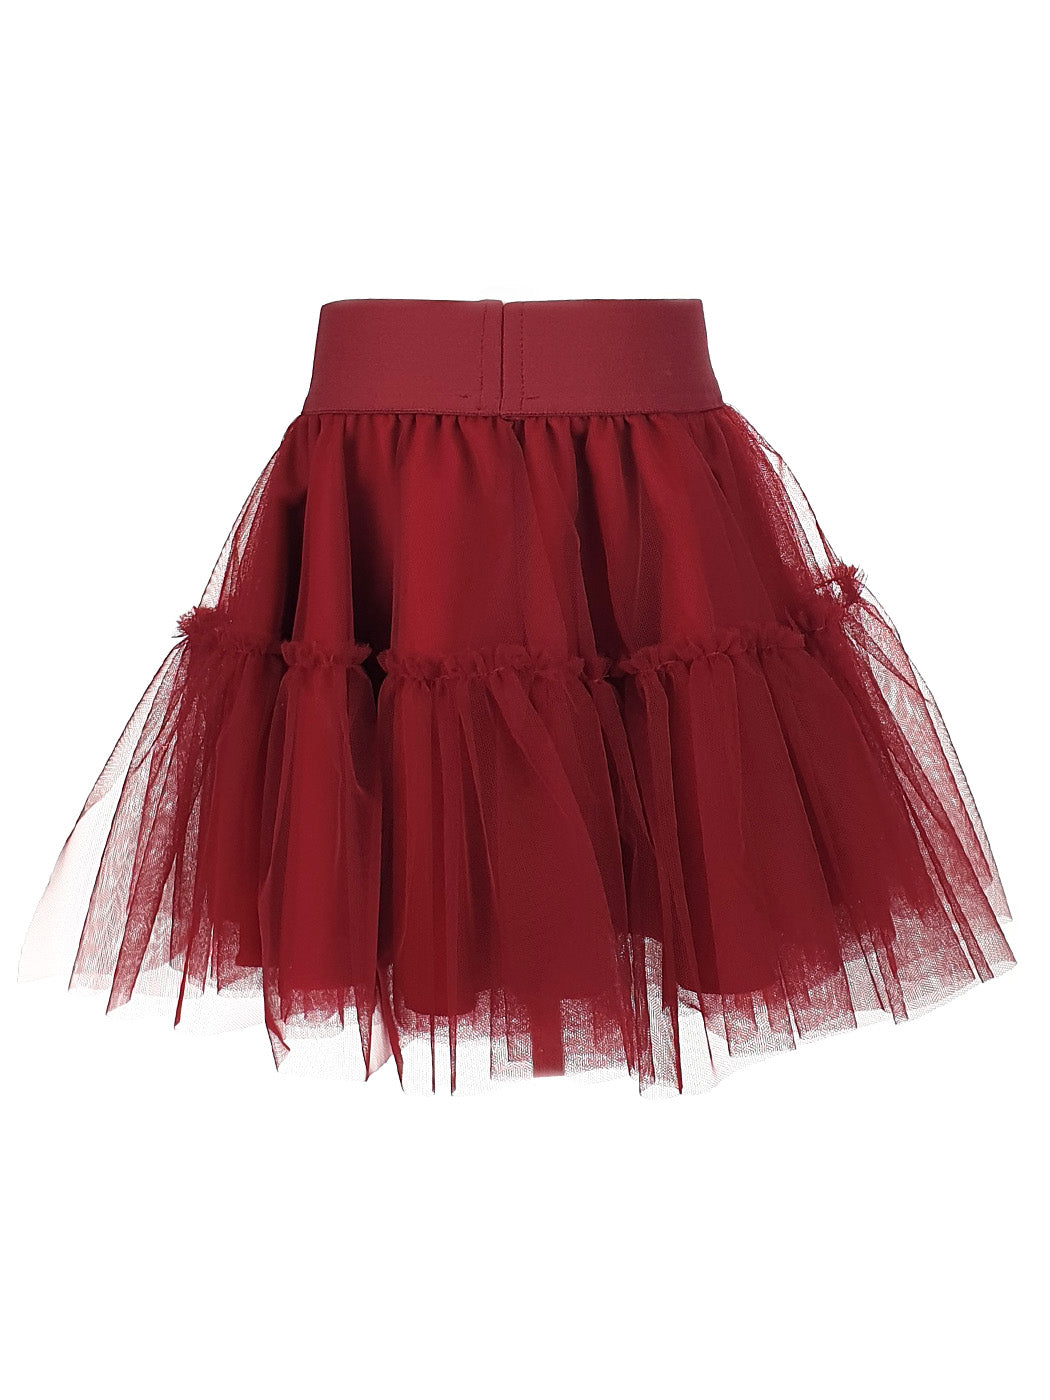 BROOKE Burgundy Tutu tulle skirt with ruffles